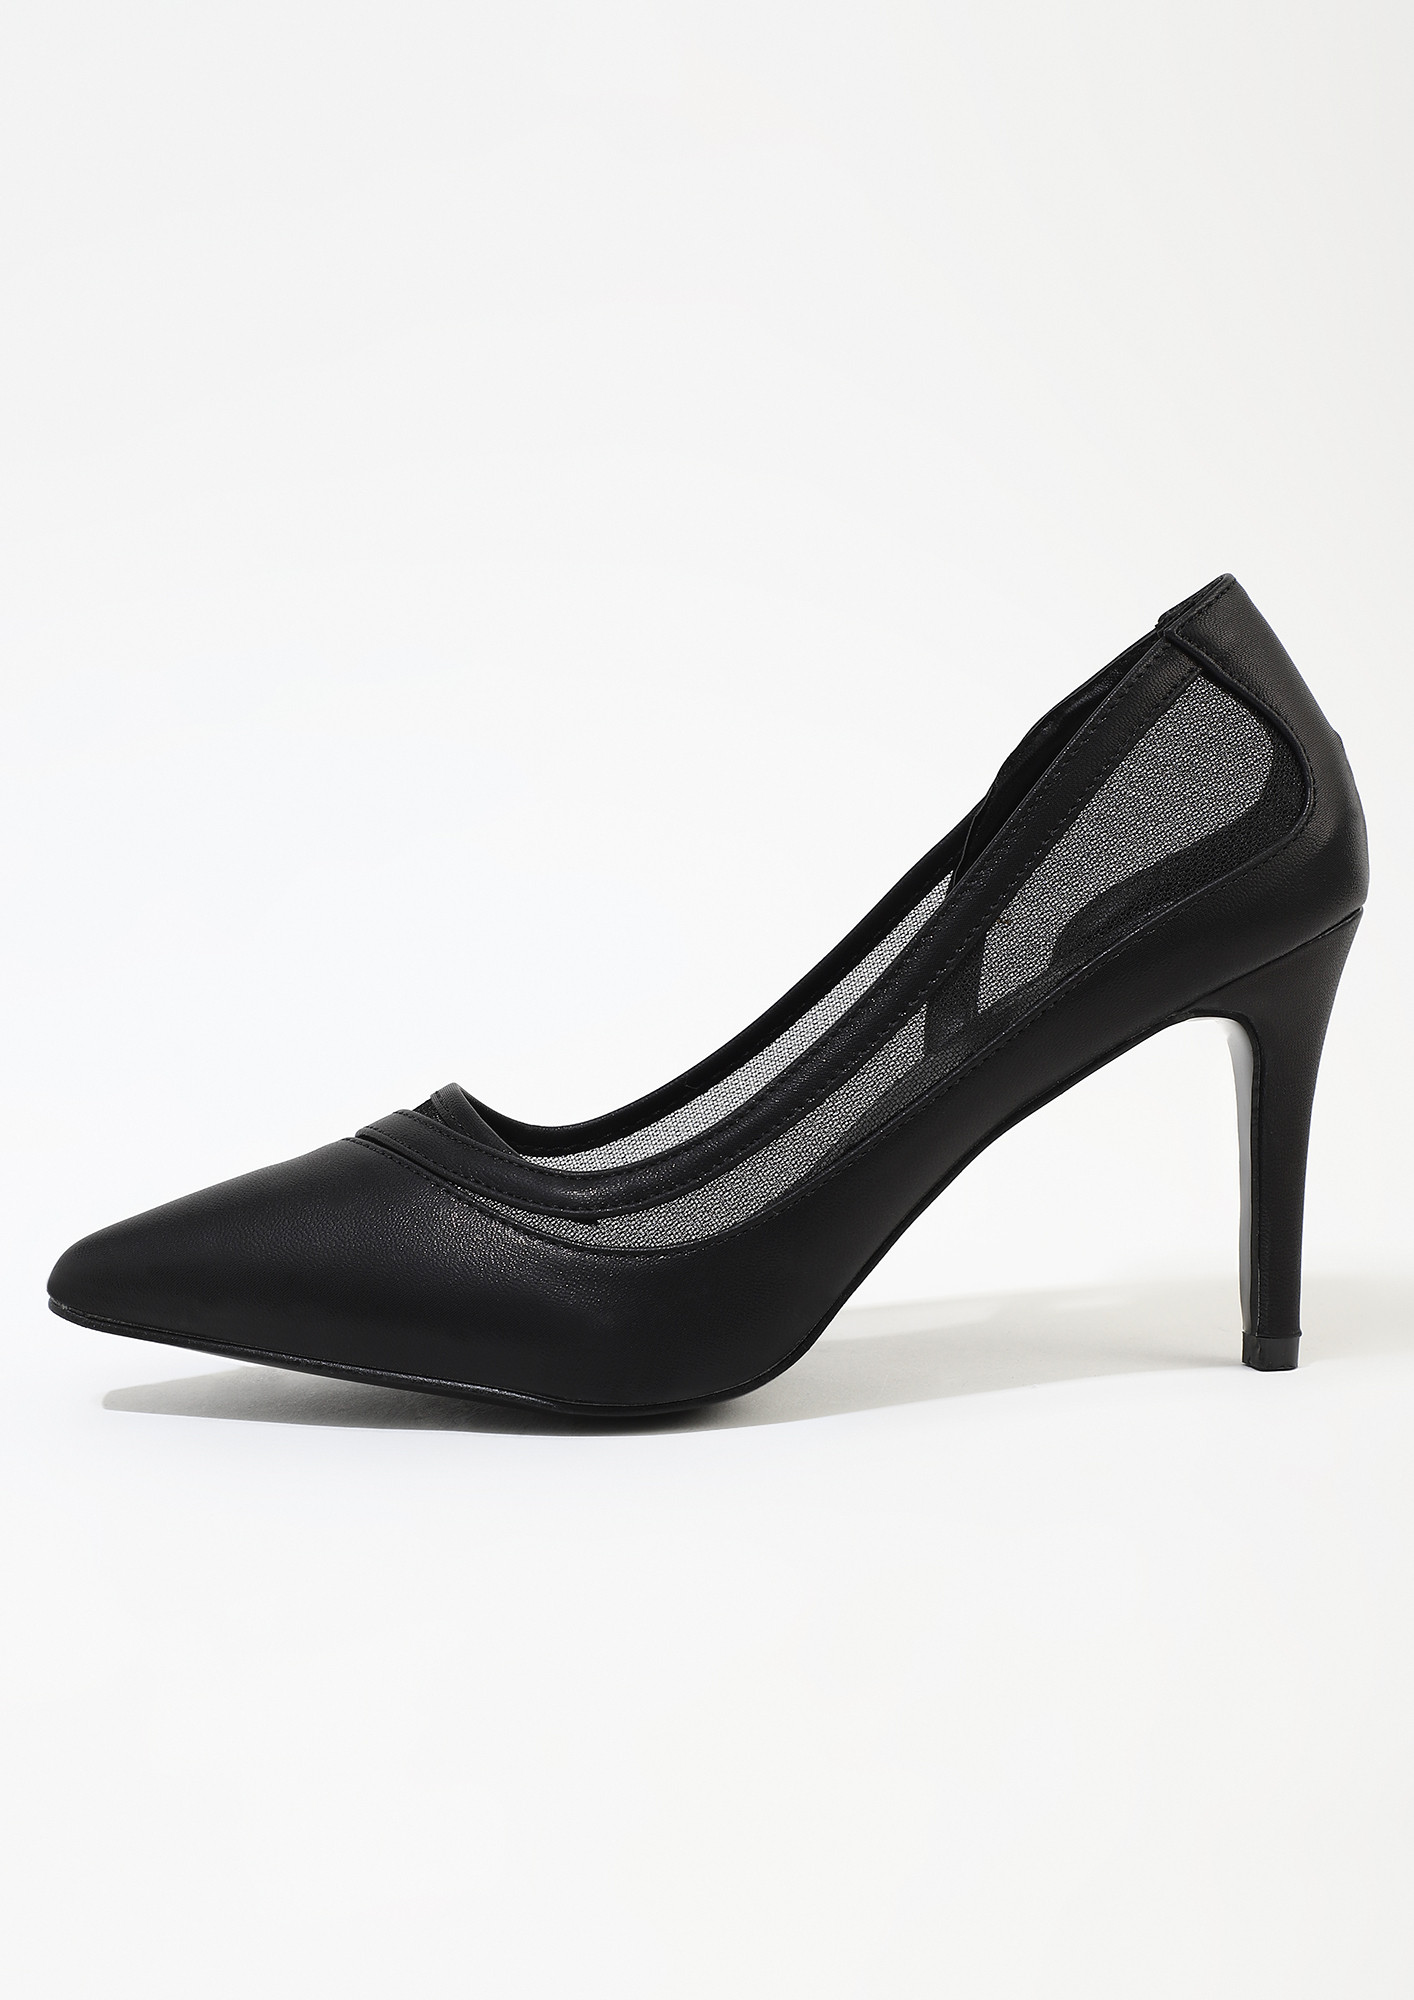 Vintage classic black pump platform high heel shoe | Black pumps, Platform  high heel shoes, Platform high heels